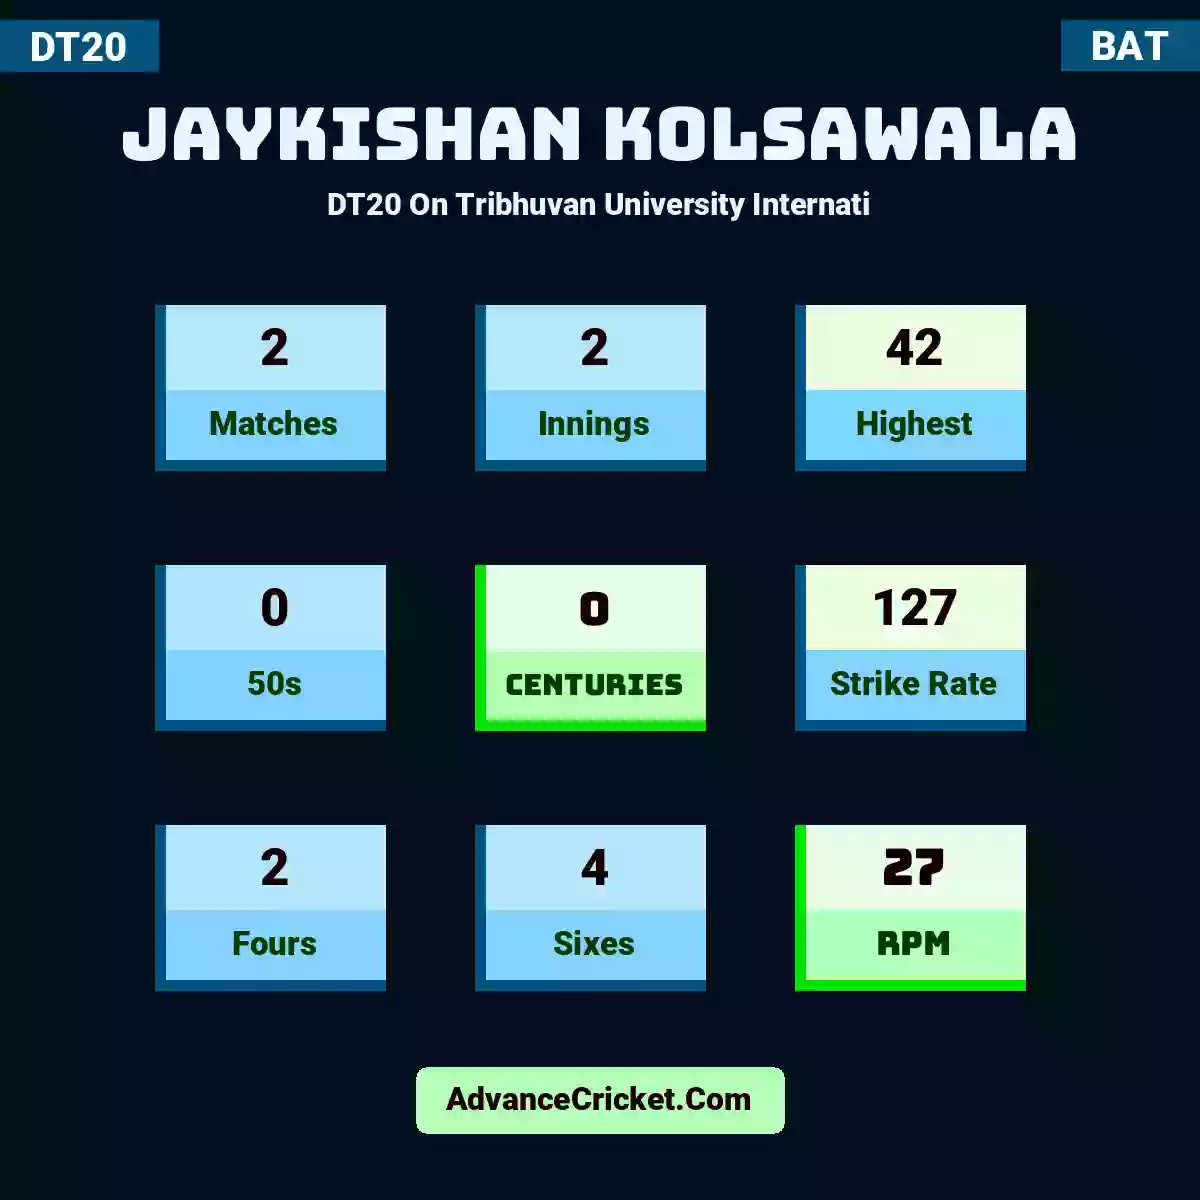 Jaykishan Kolsawala DT20  On Tribhuvan University Internati, Jaykishan Kolsawala played 2 matches, scored 42 runs as highest, 0 half-centuries, and 0 centuries, with a strike rate of 127. J.Kolsawala hit 2 fours and 4 sixes, with an RPM of 27.